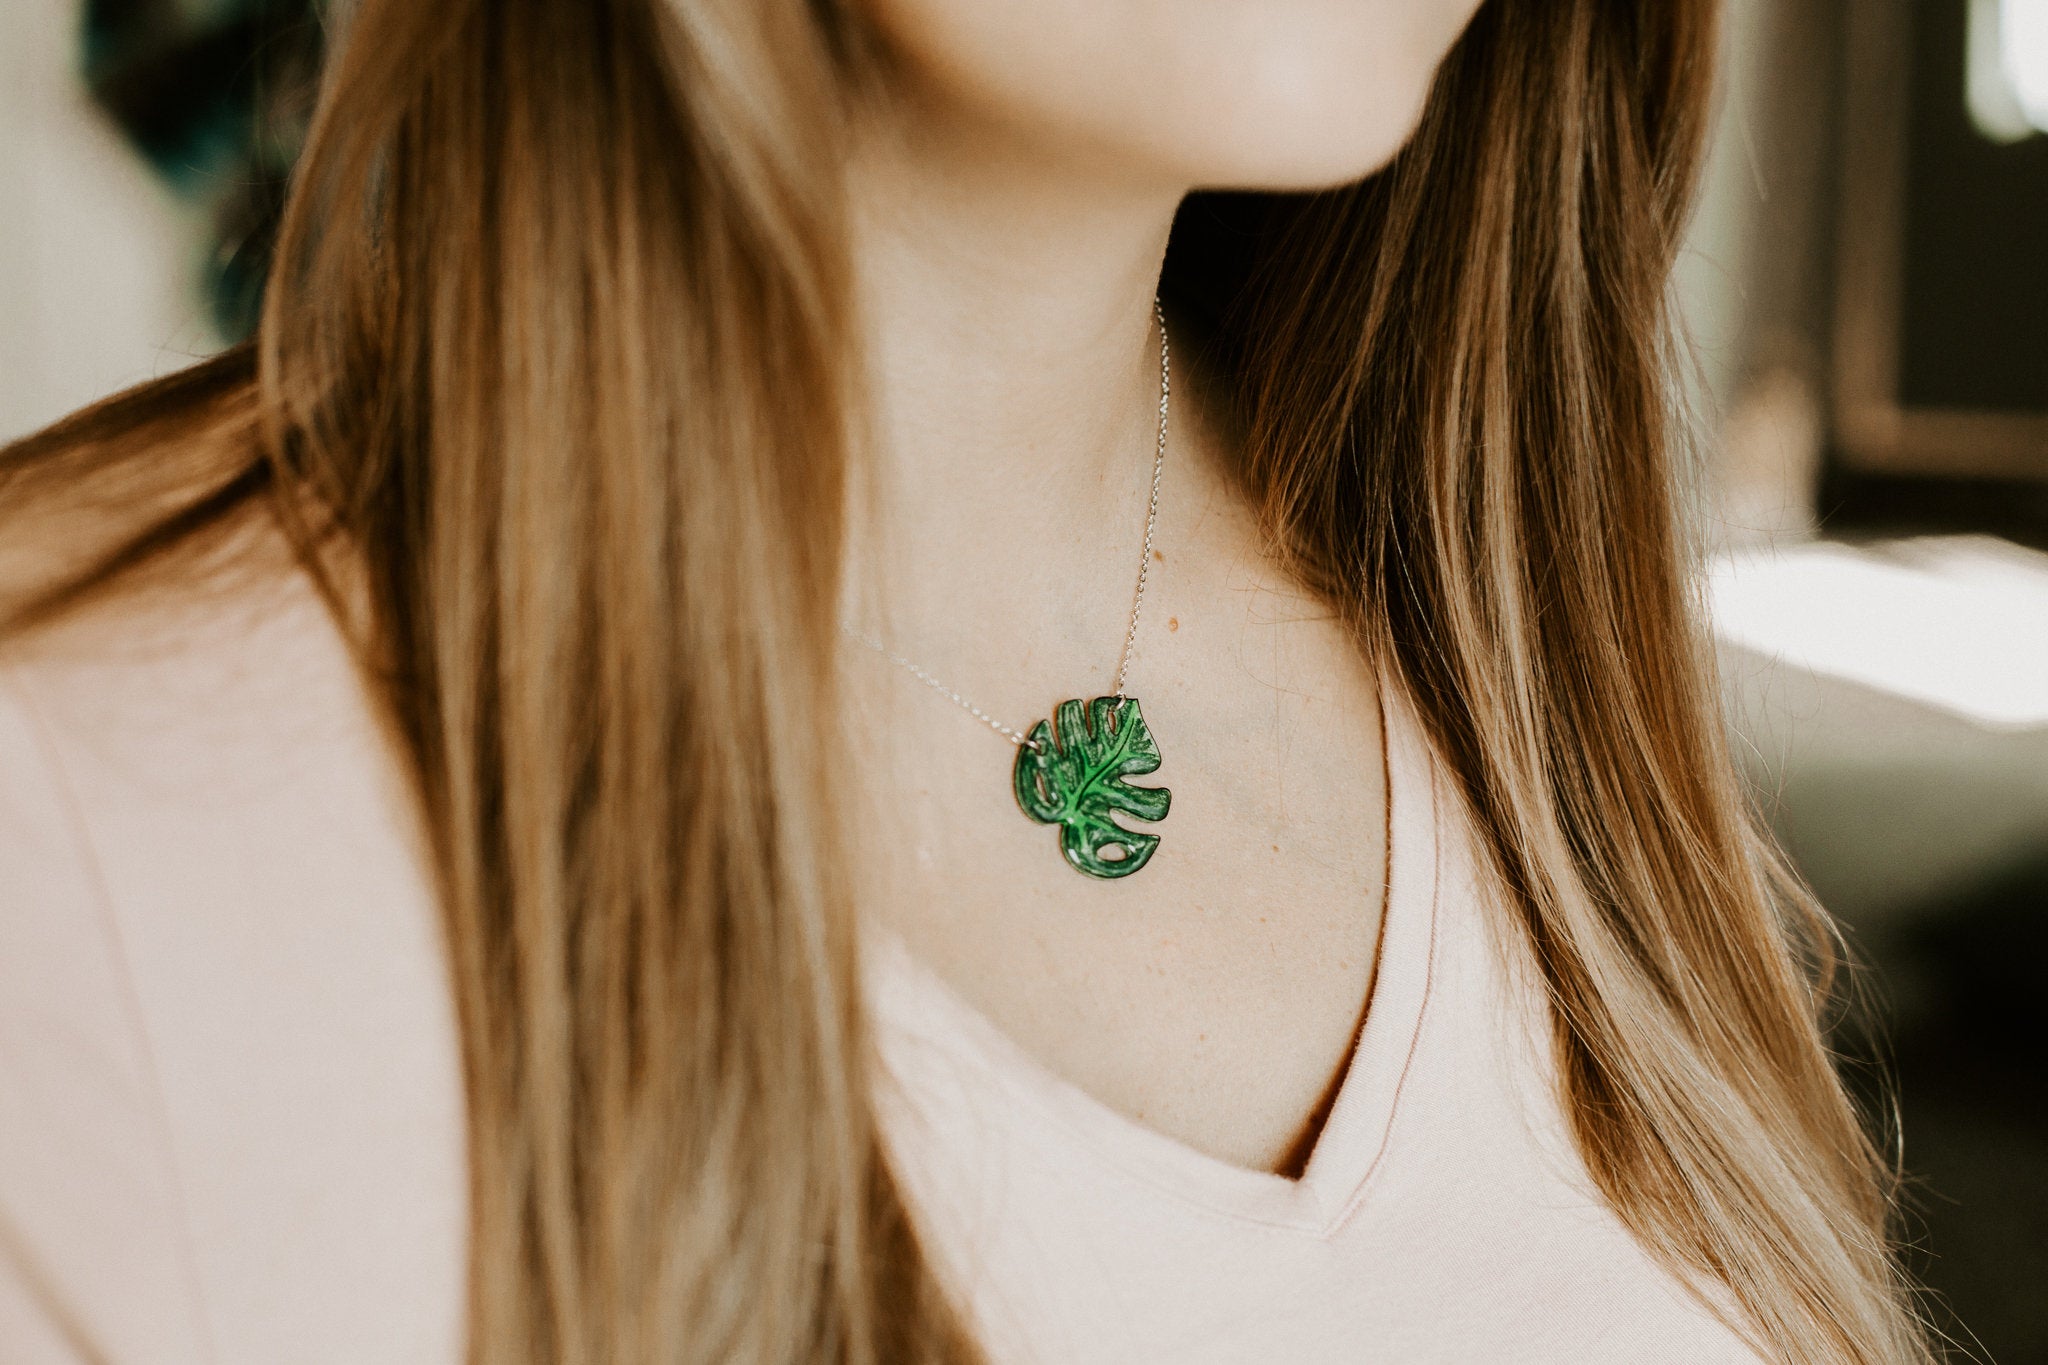 Monstera Deliciosa Leaf Pendant Necklace